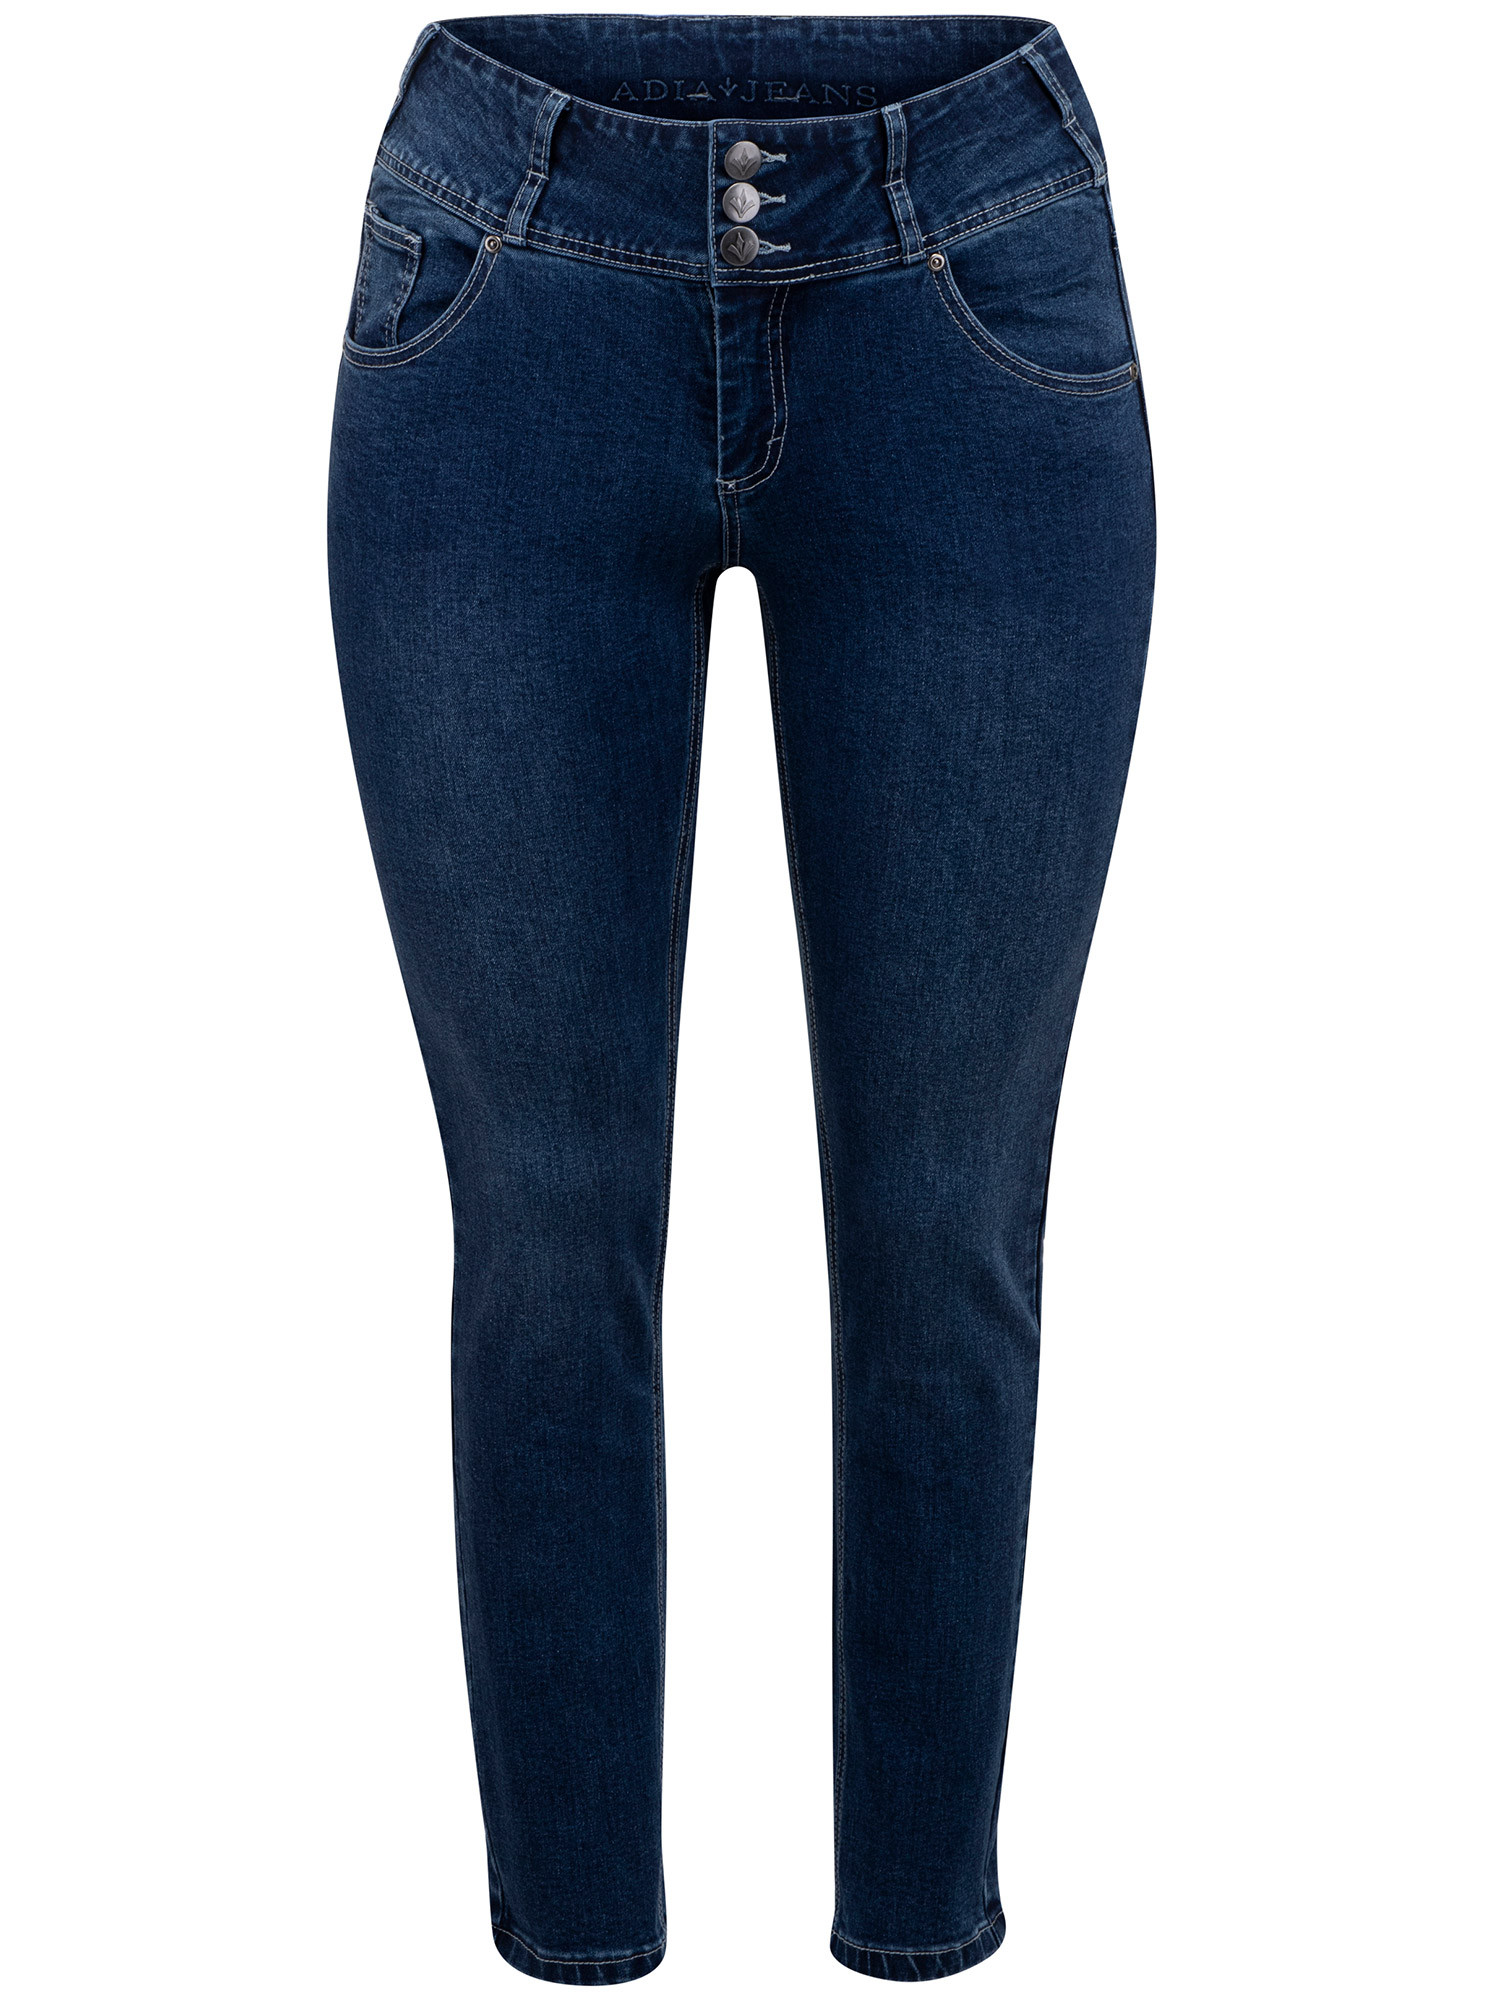 ROME - Blå jeans med stretch